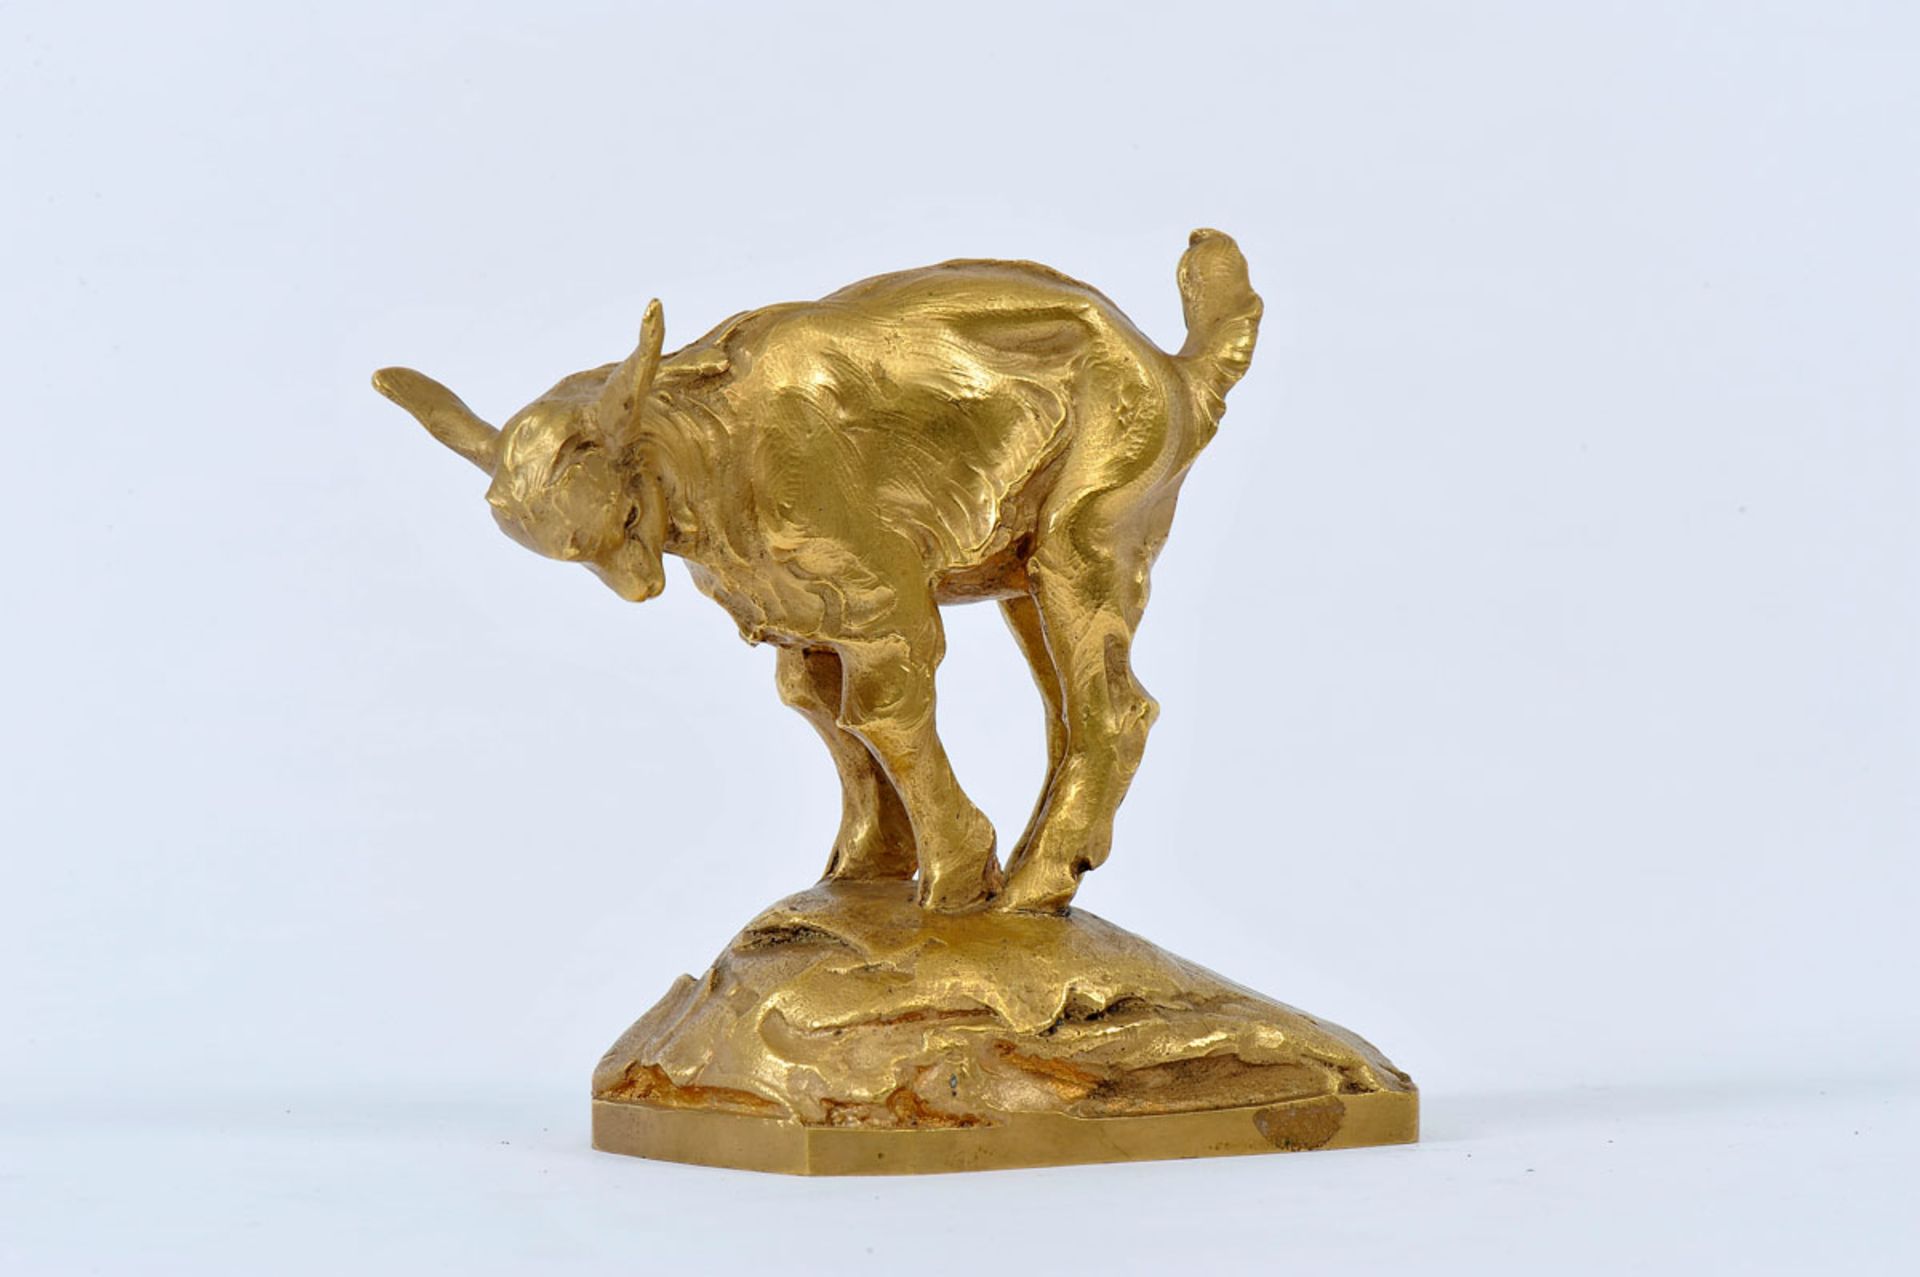 JOÃO DA SILVA -1880-1960, A Goat, gilt bronze sculpture, signed and dated 1924, marked MODELE,